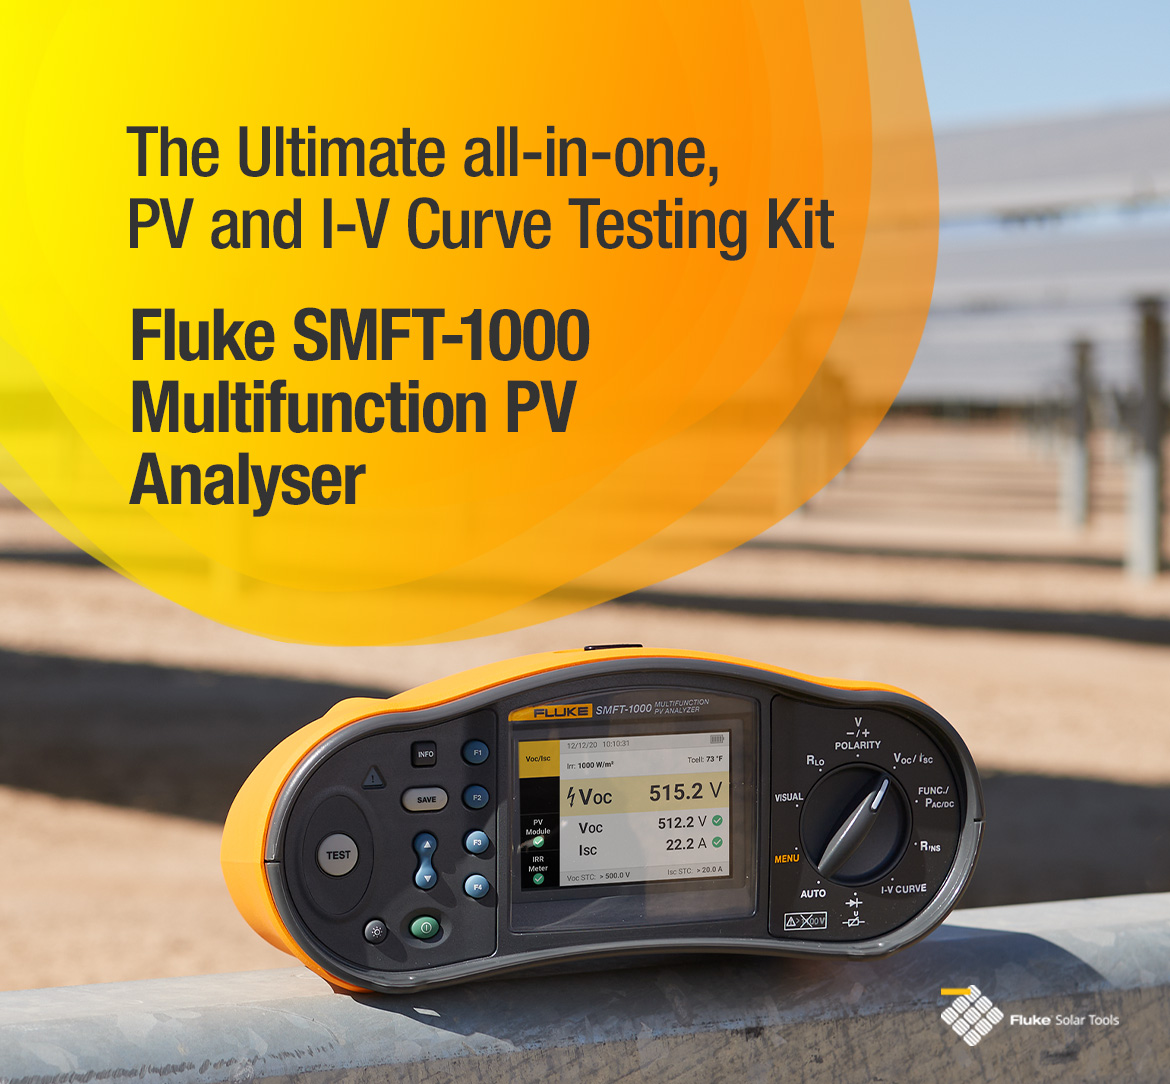 Fluke SMFT-1000 Solar Multifunction PV Tester, Performance Analyser and I-V Curve Tracer